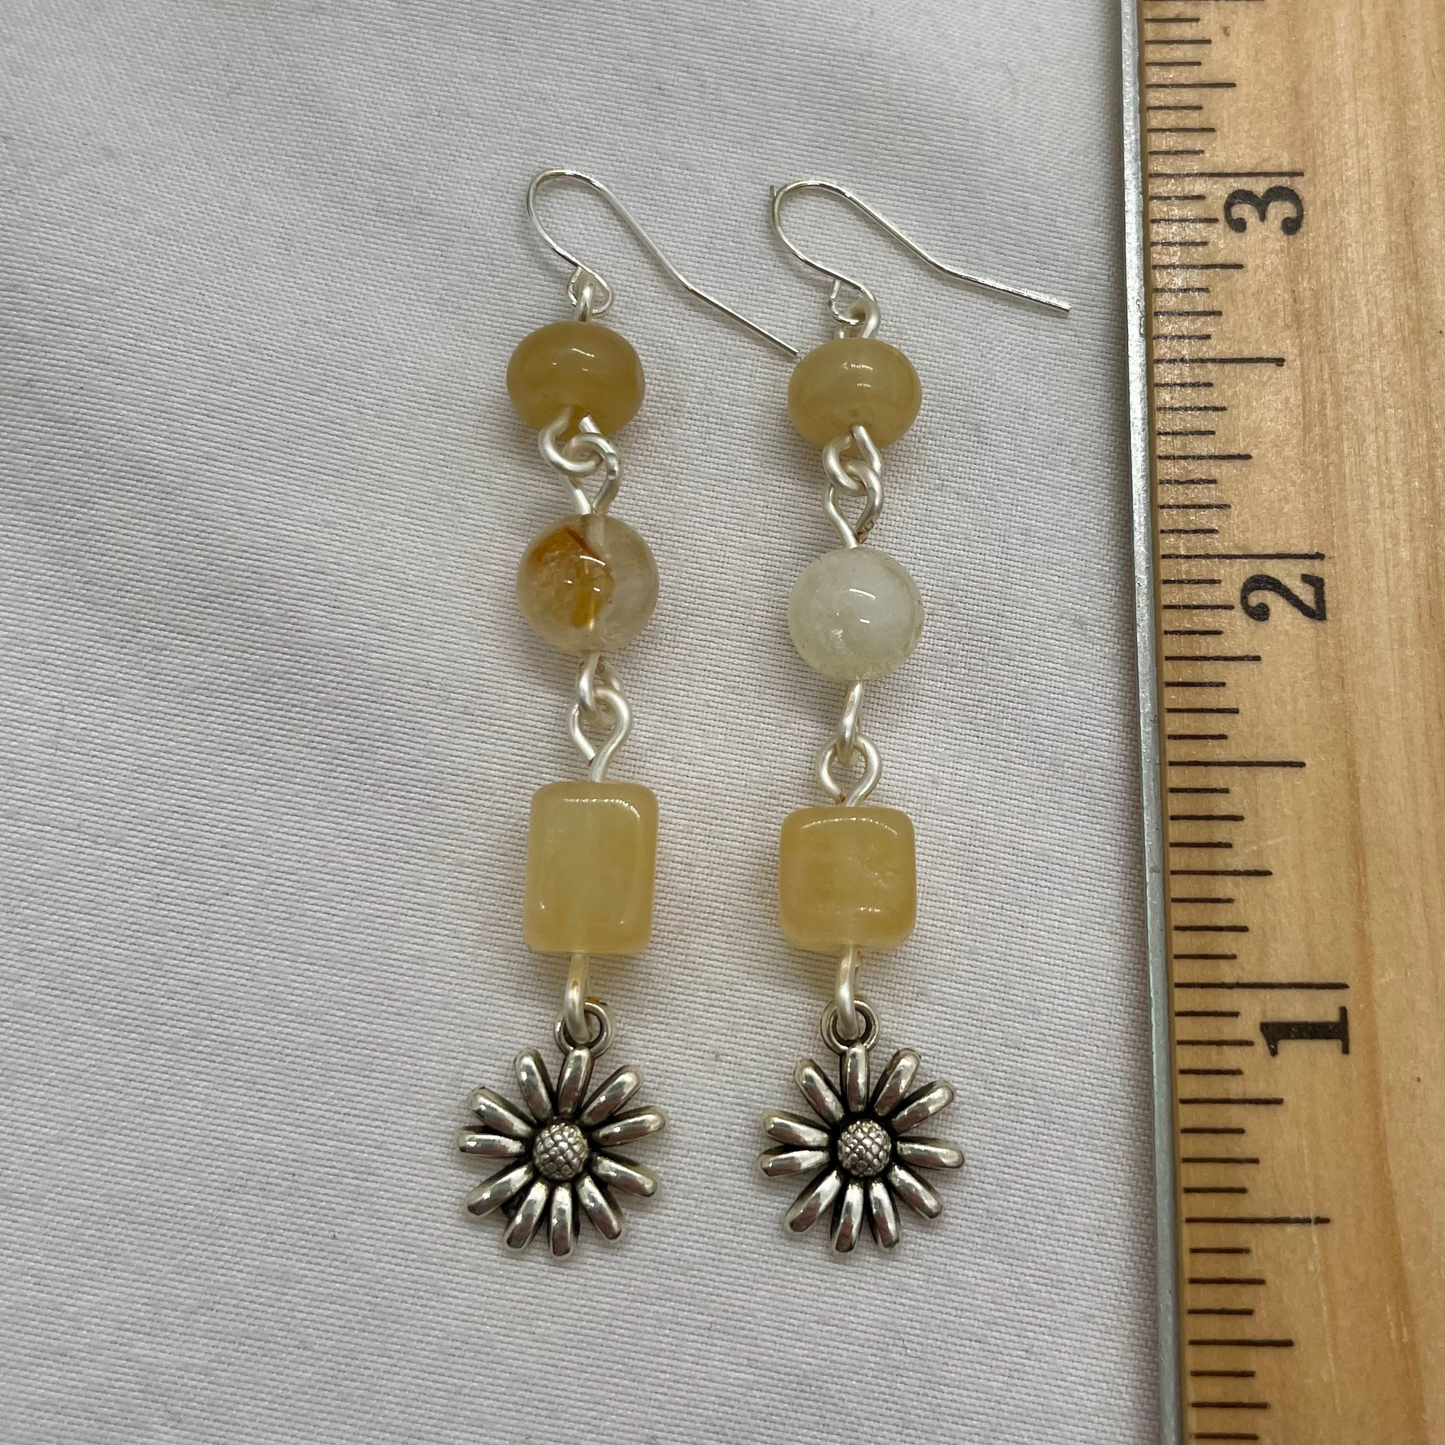 Honey Sunshine Earrings: Unique Citrine Gemstone Dangles with Flower Charm | summer gift | fun boho style | yellow for sunshine